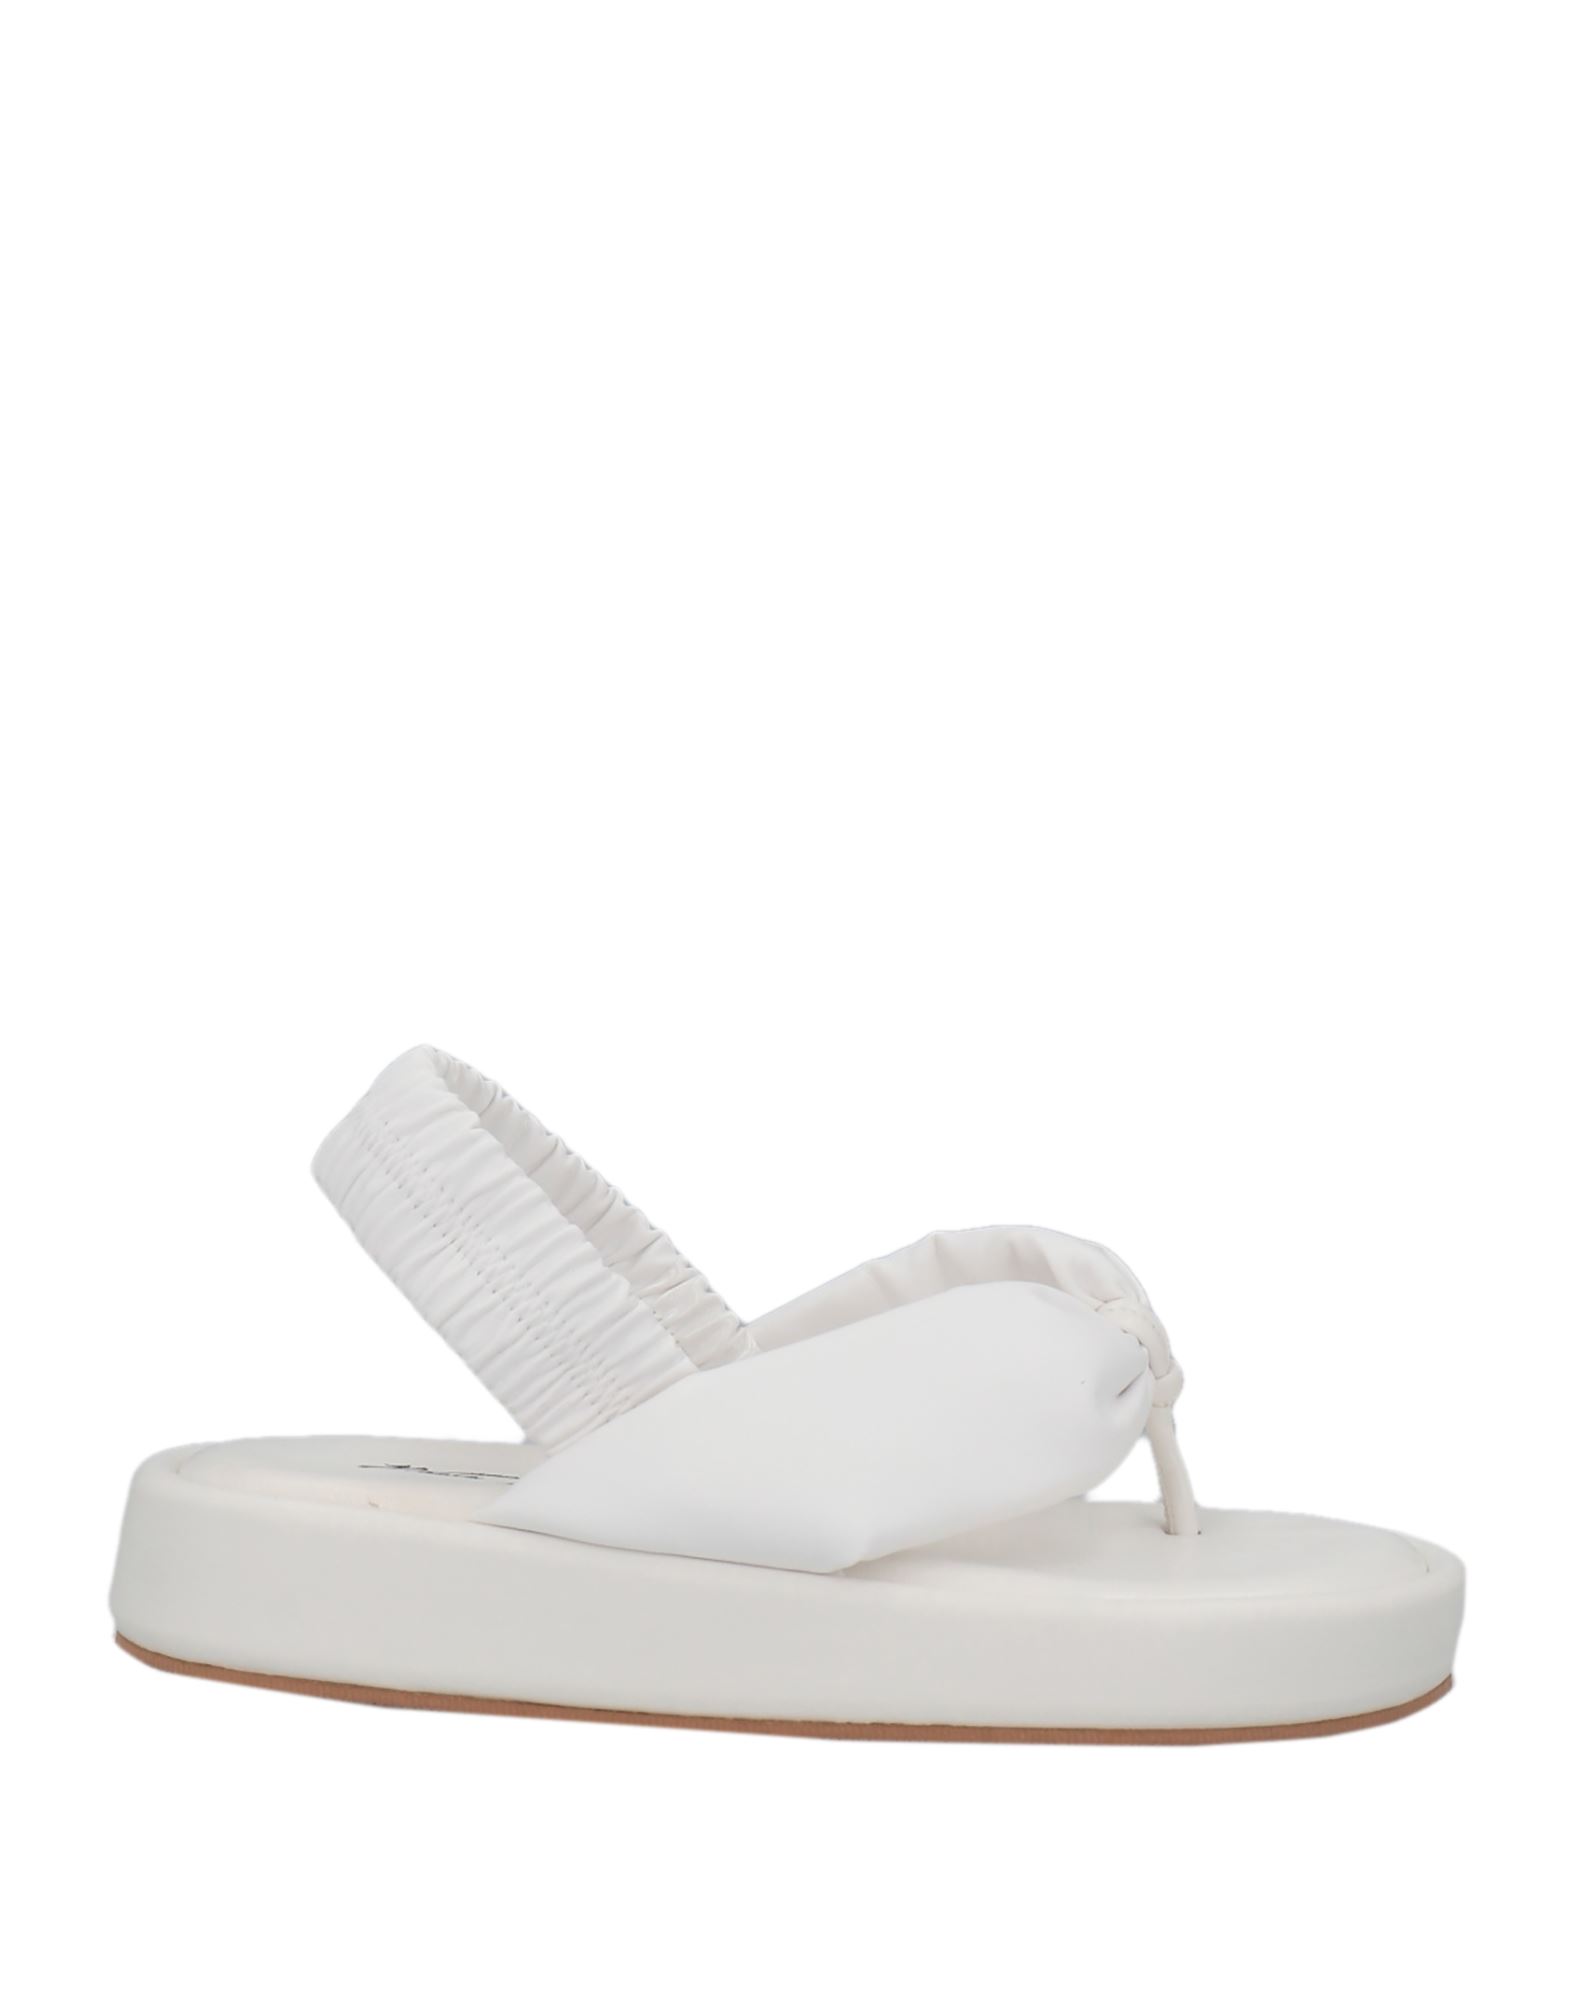 Paolo Mattei Toe Strap Sandals In White